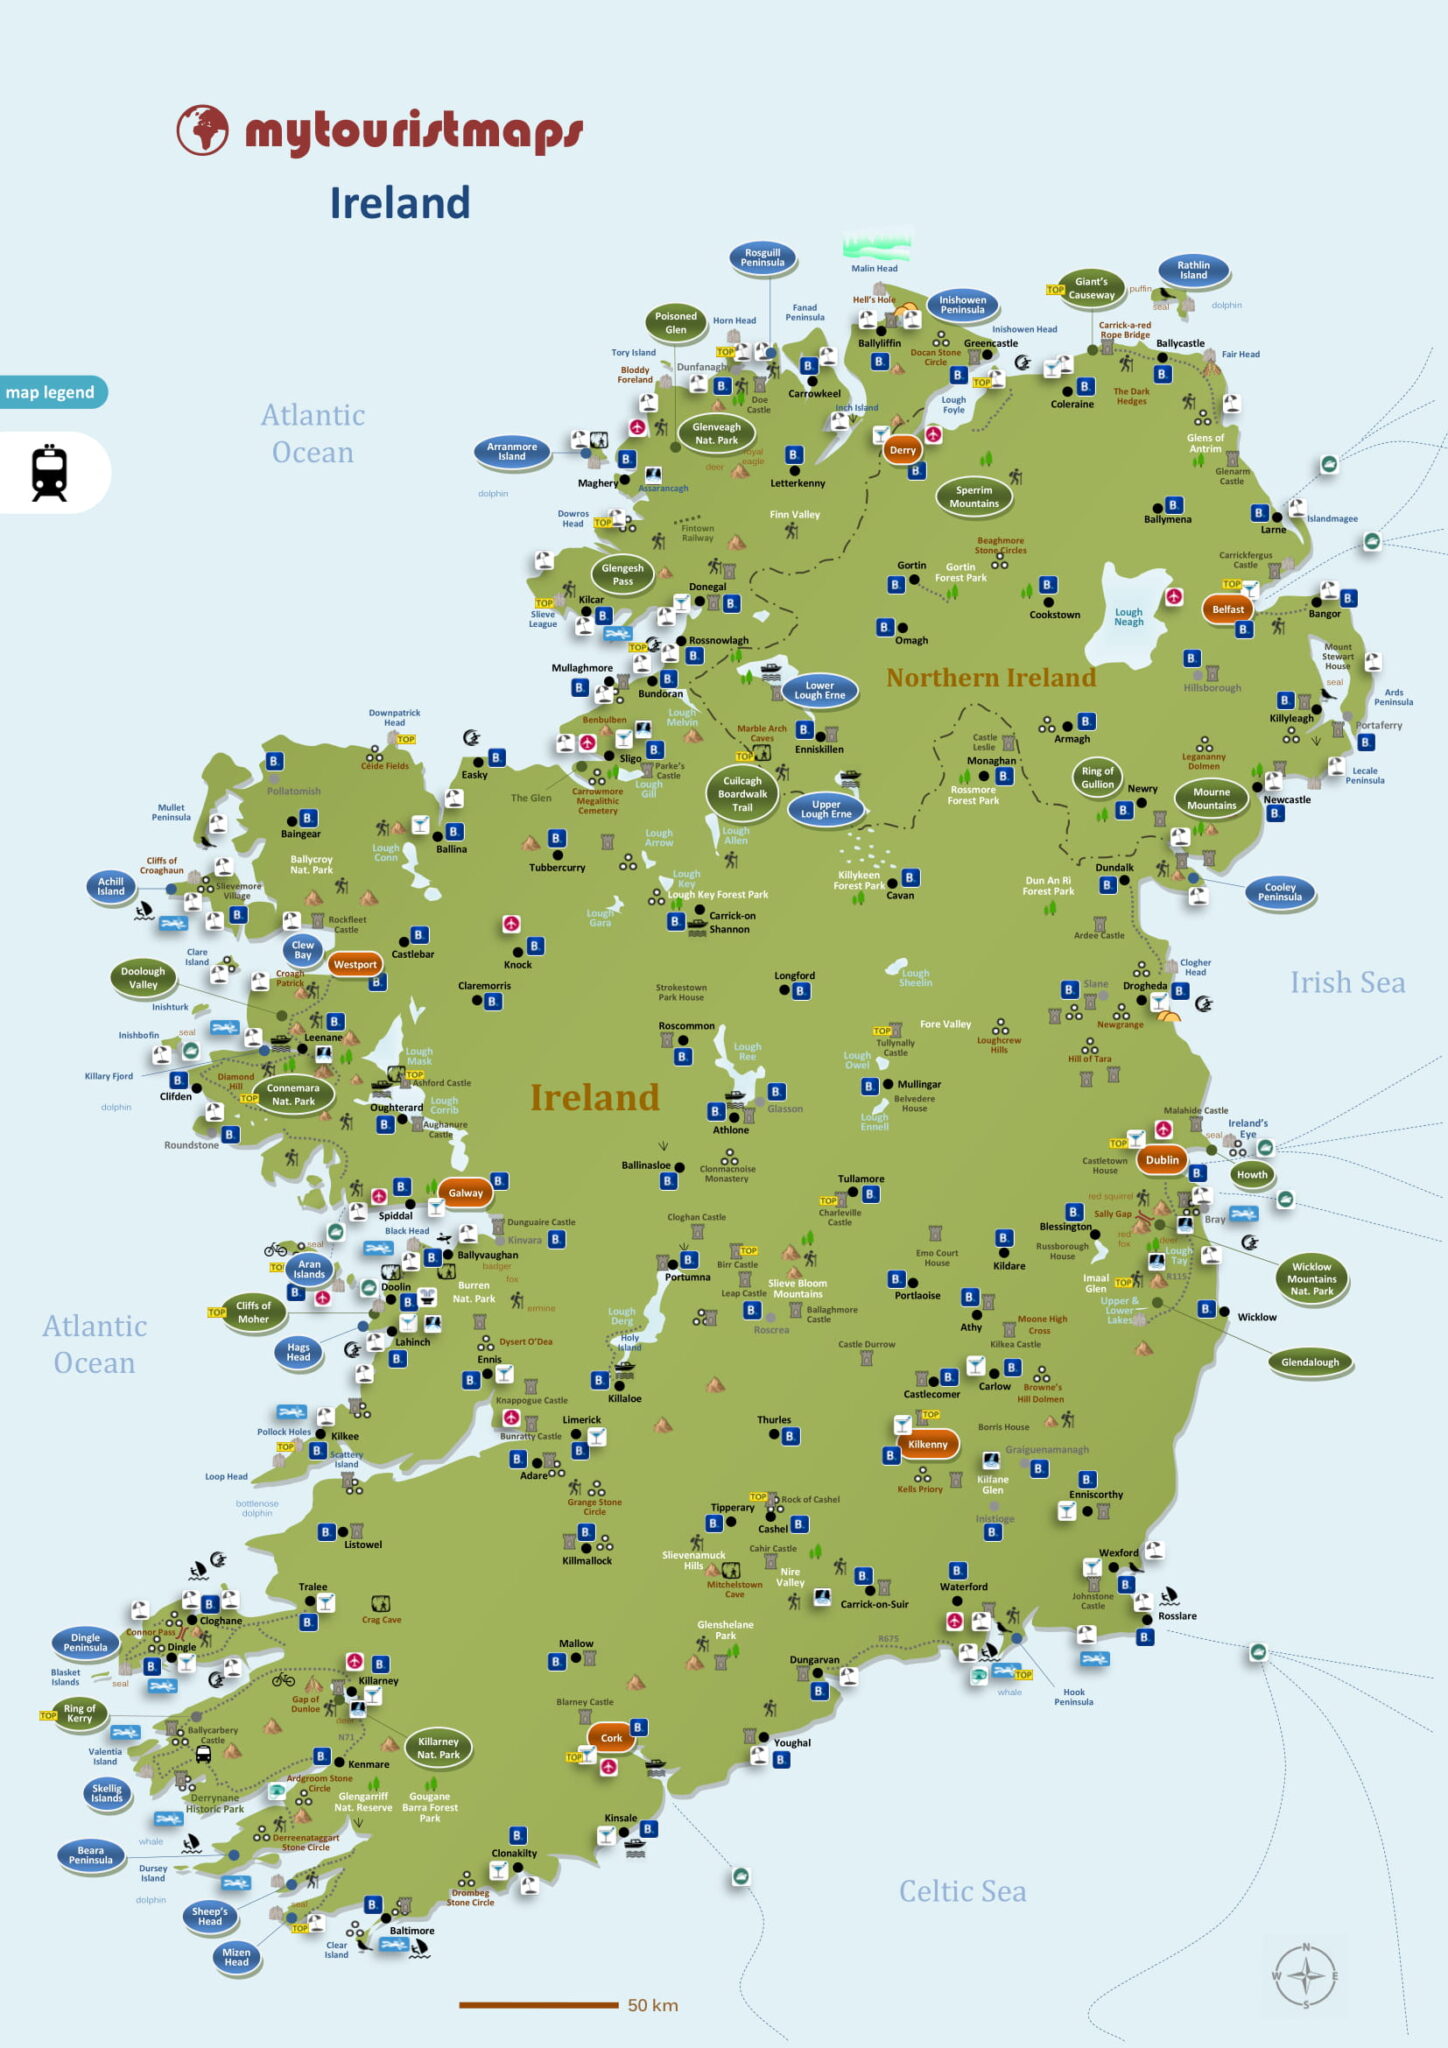 mytouristmaps.com - Interactive travel and tourist map of IRELAND